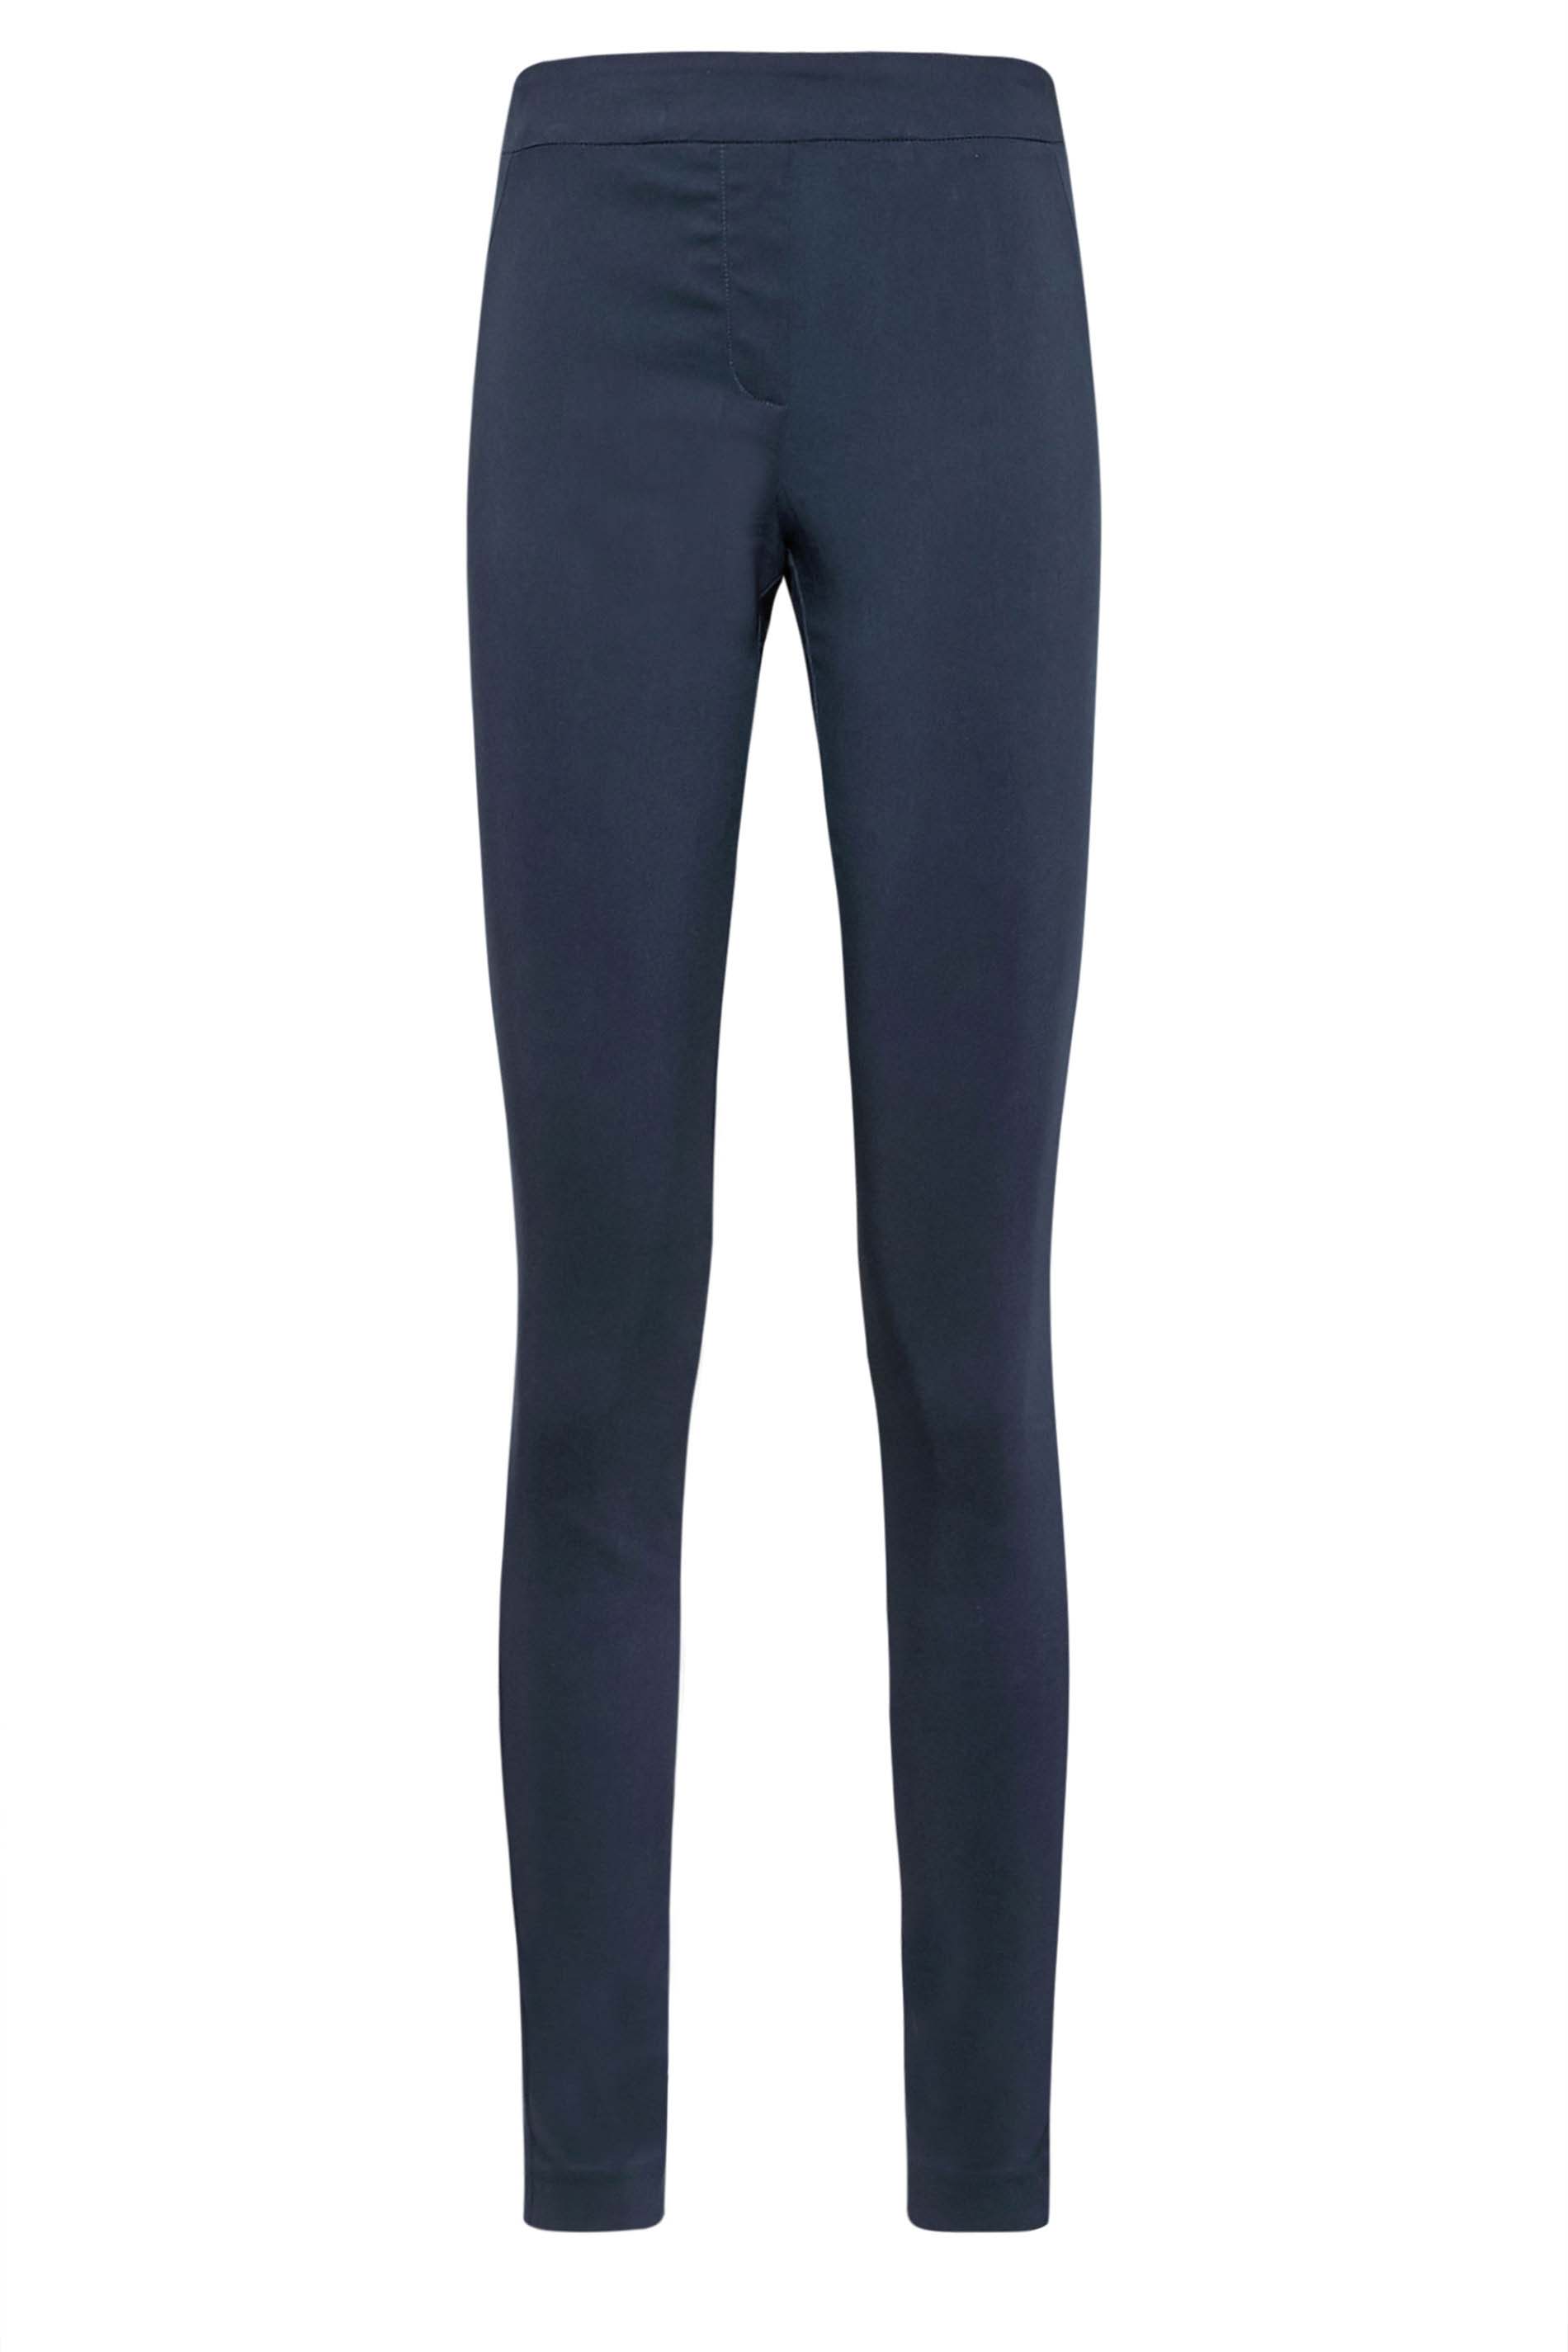 LTS Tall Women's Navy Blue Stretch Skinny Leg Trousers | Long Tall Sally 2